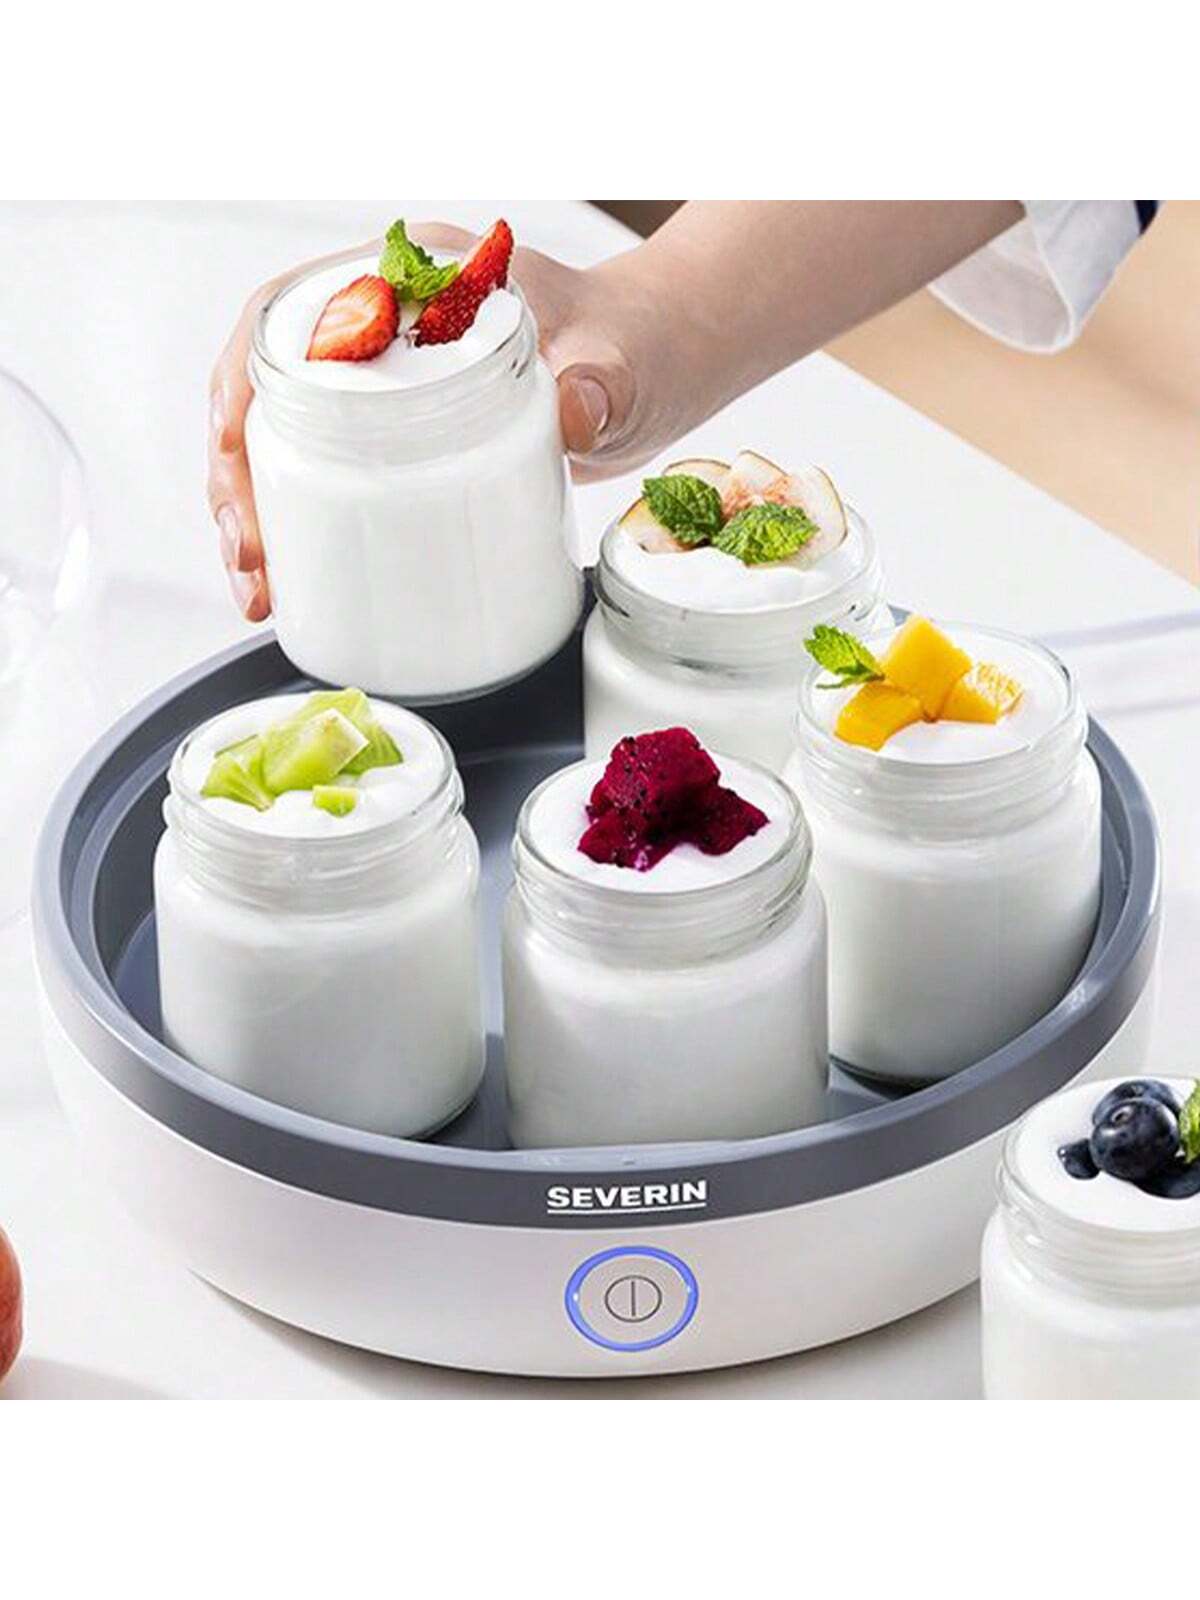 Severin JG3518 Yogurt Maker Healthy Enjoyment with 7 Dispenser Tins-White-2